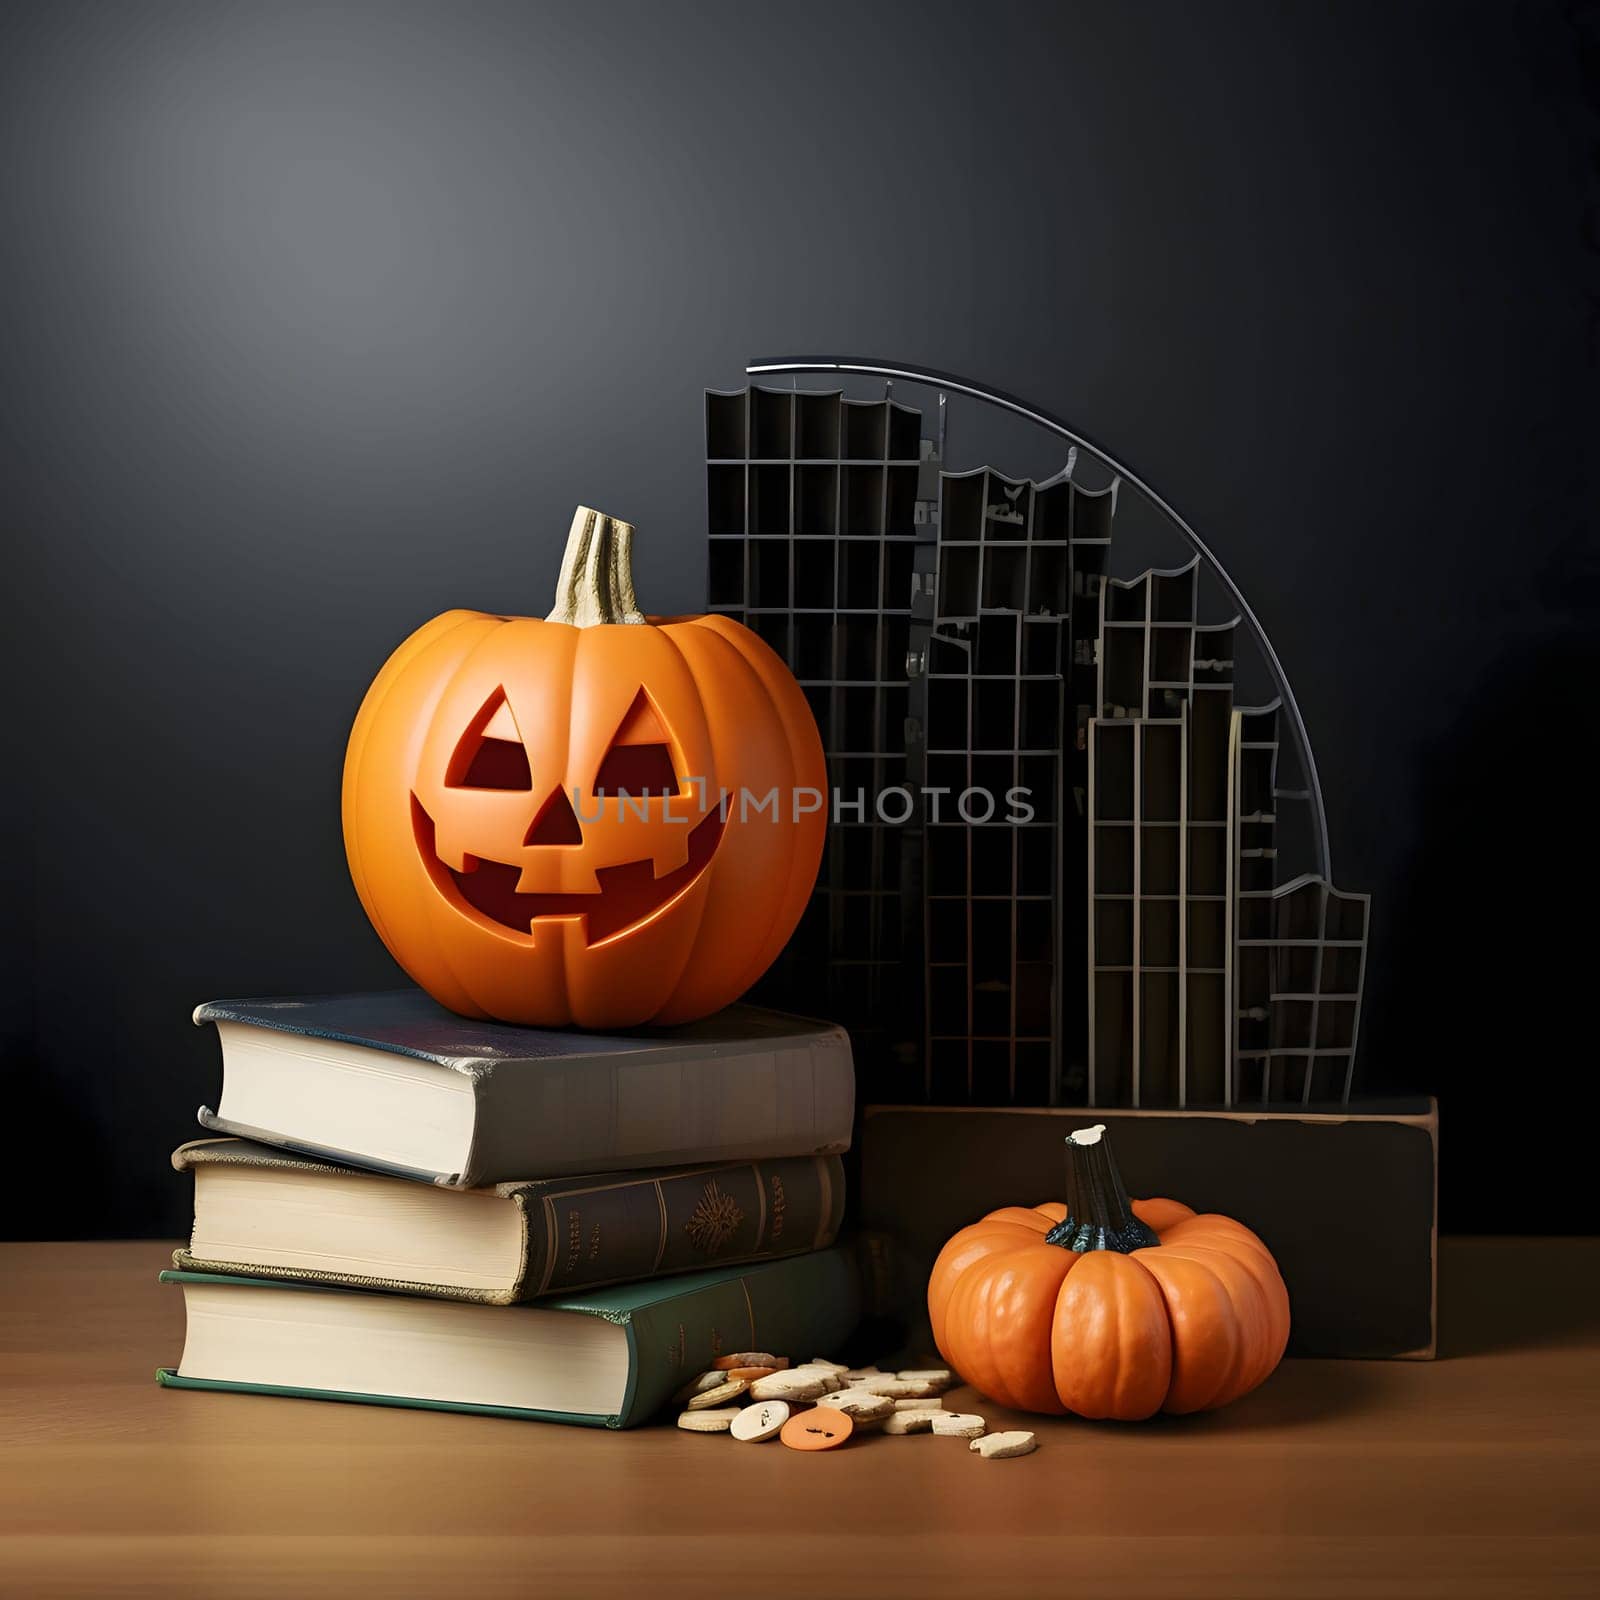 Jack-o-lantern pumpkin on a table on three books, a Halloween image. by ThemesS